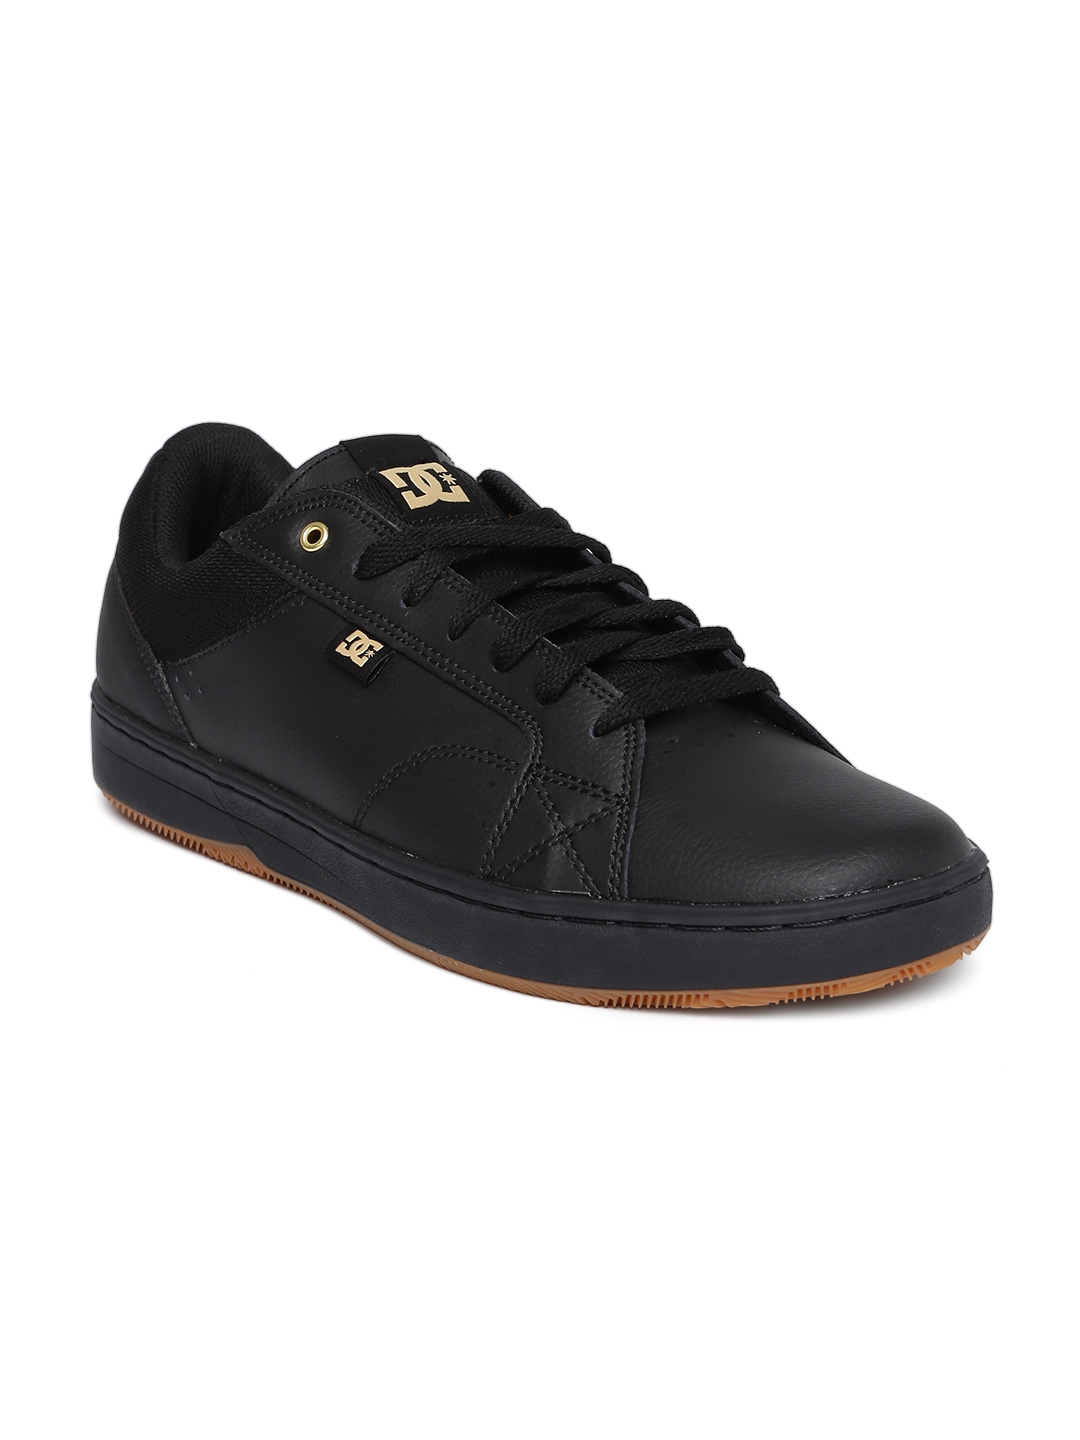 Buy DC Men Black Astor Leather Sneakers 